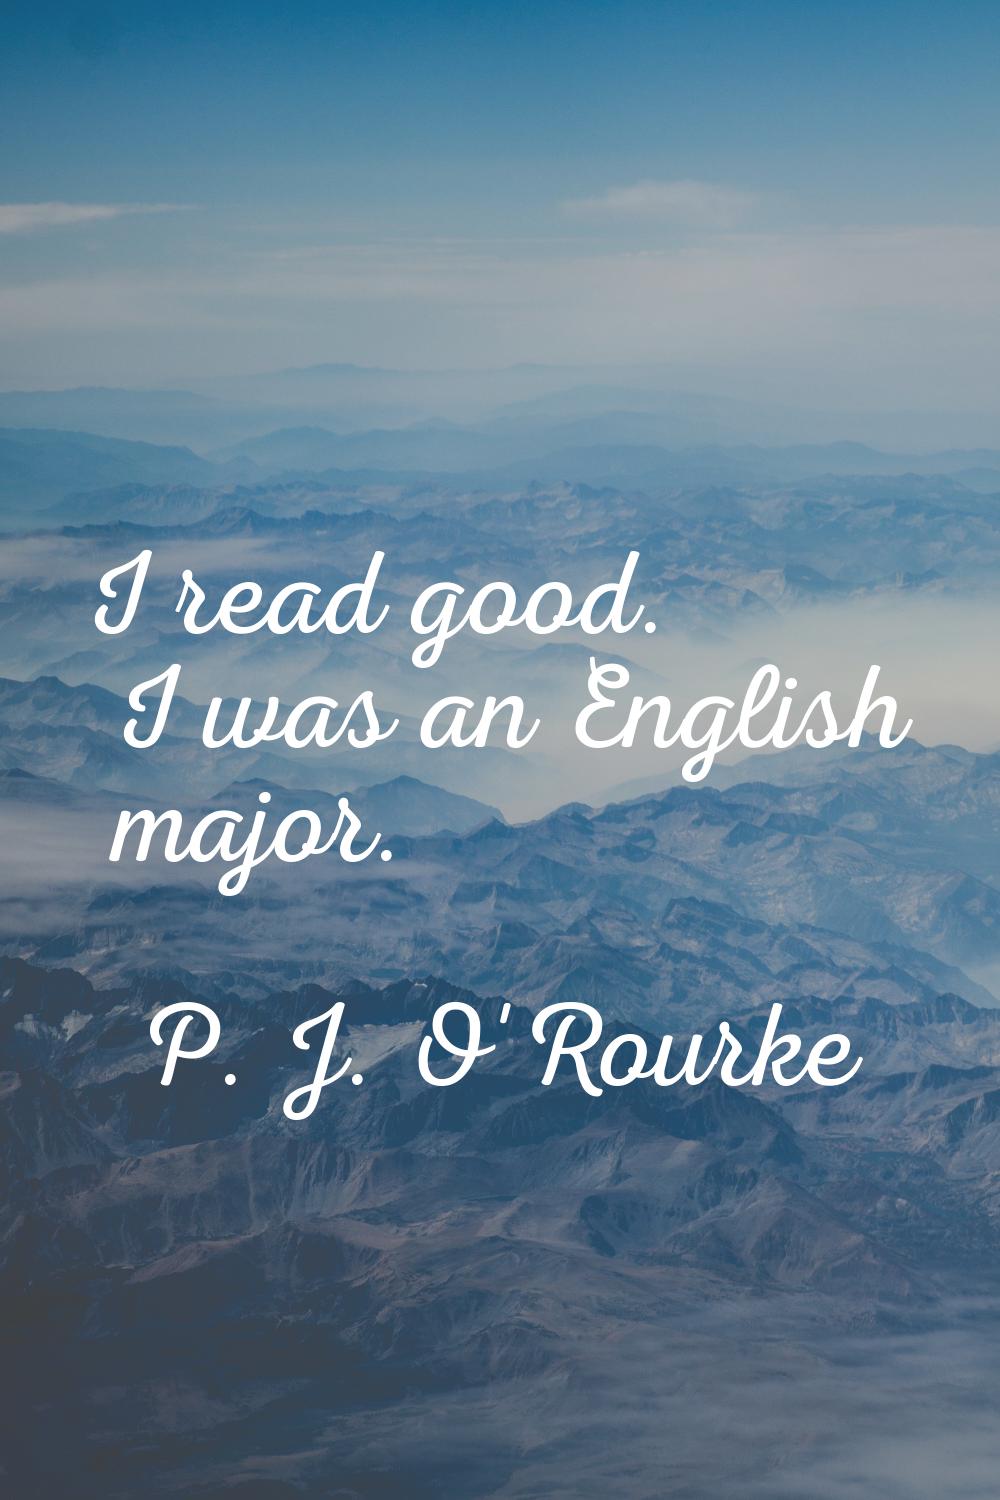 I read good. I was an English major.